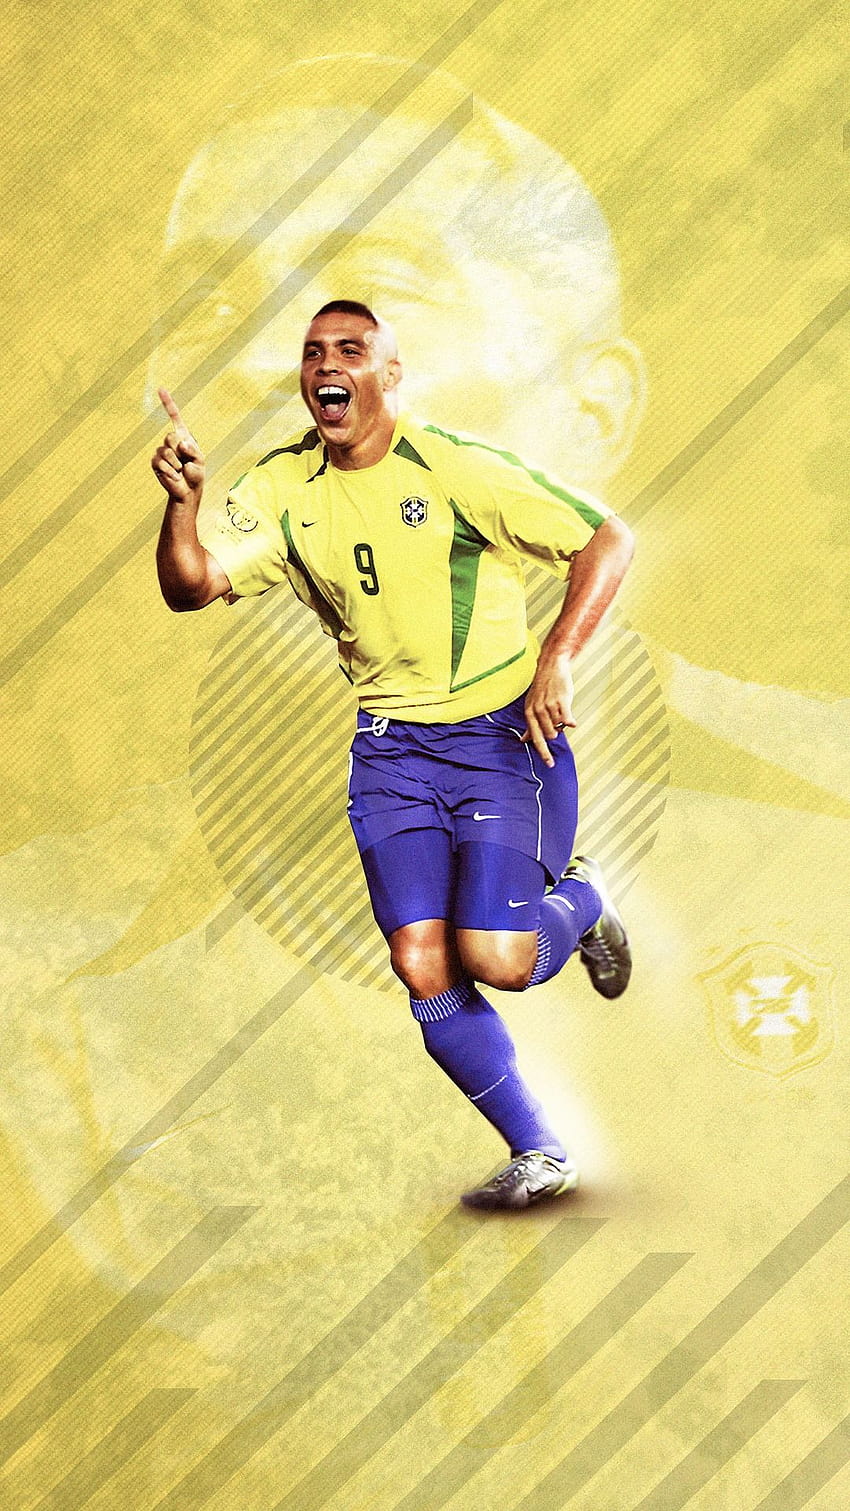 Ronaldo Nazario  Ronaldo fenomeno Nike futebol Fotografia de futebol